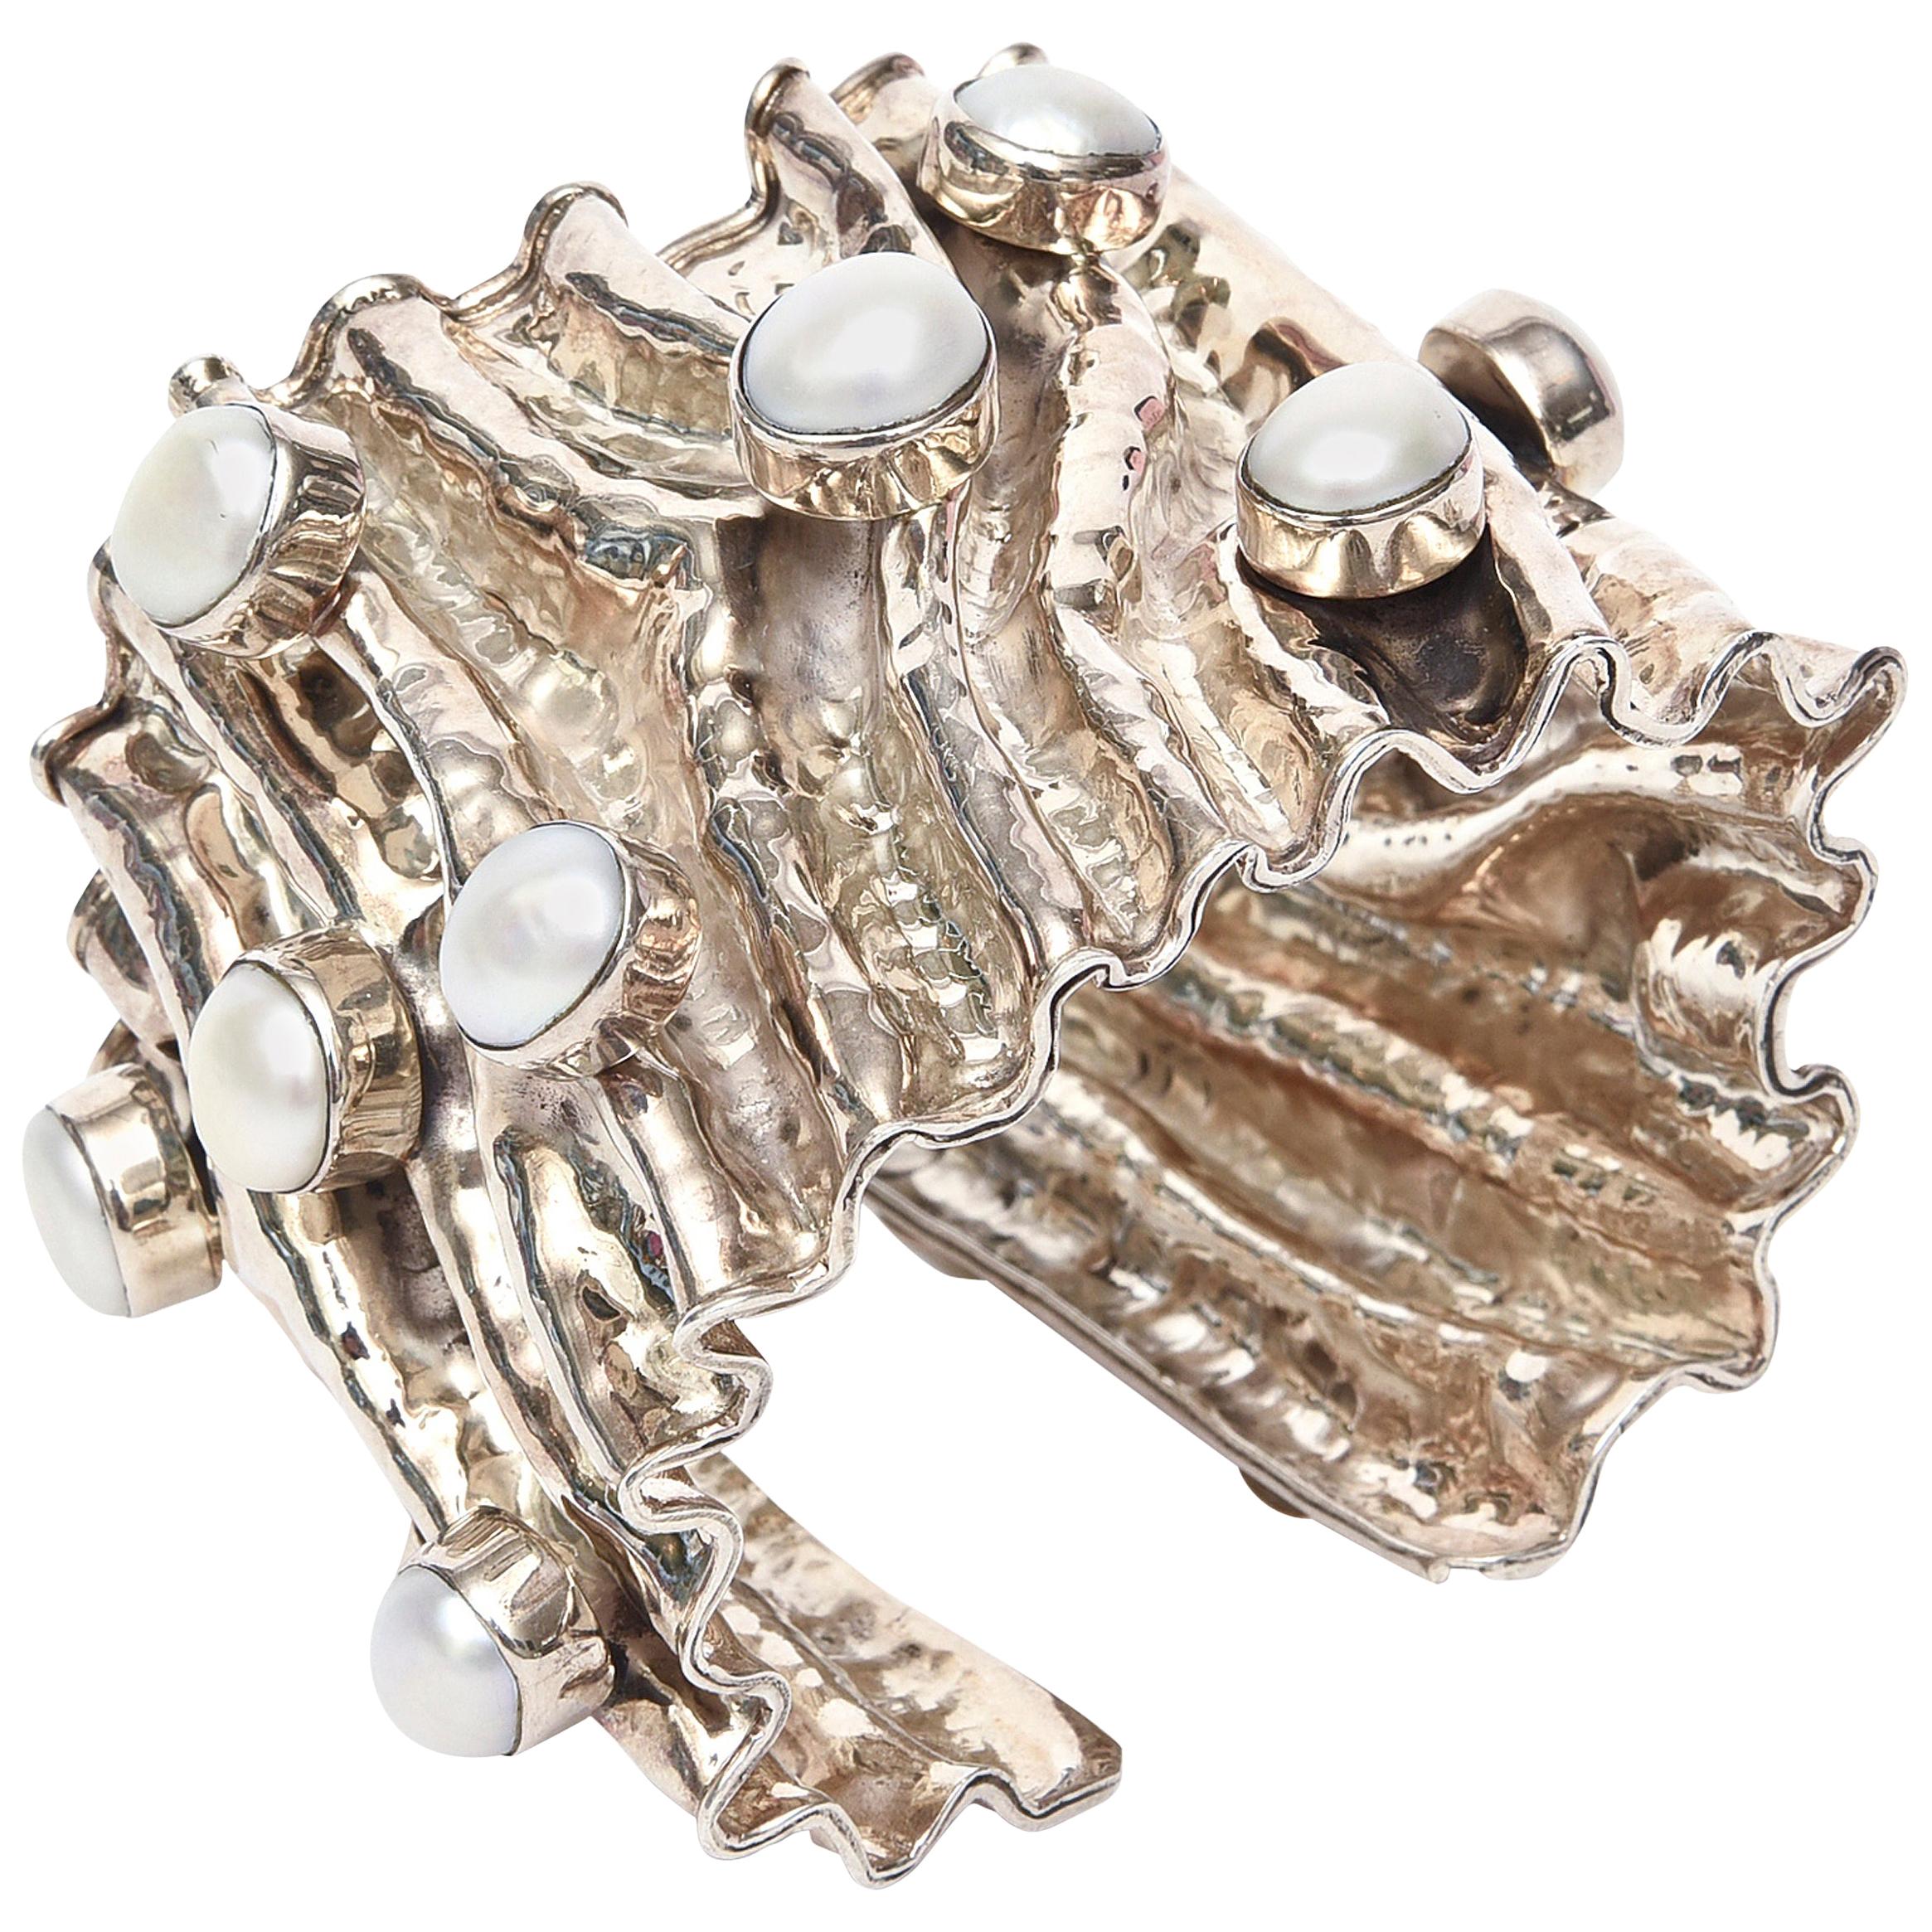  Monumental & Sculptural Sterling Silver & Pearl Cuff Bracelet